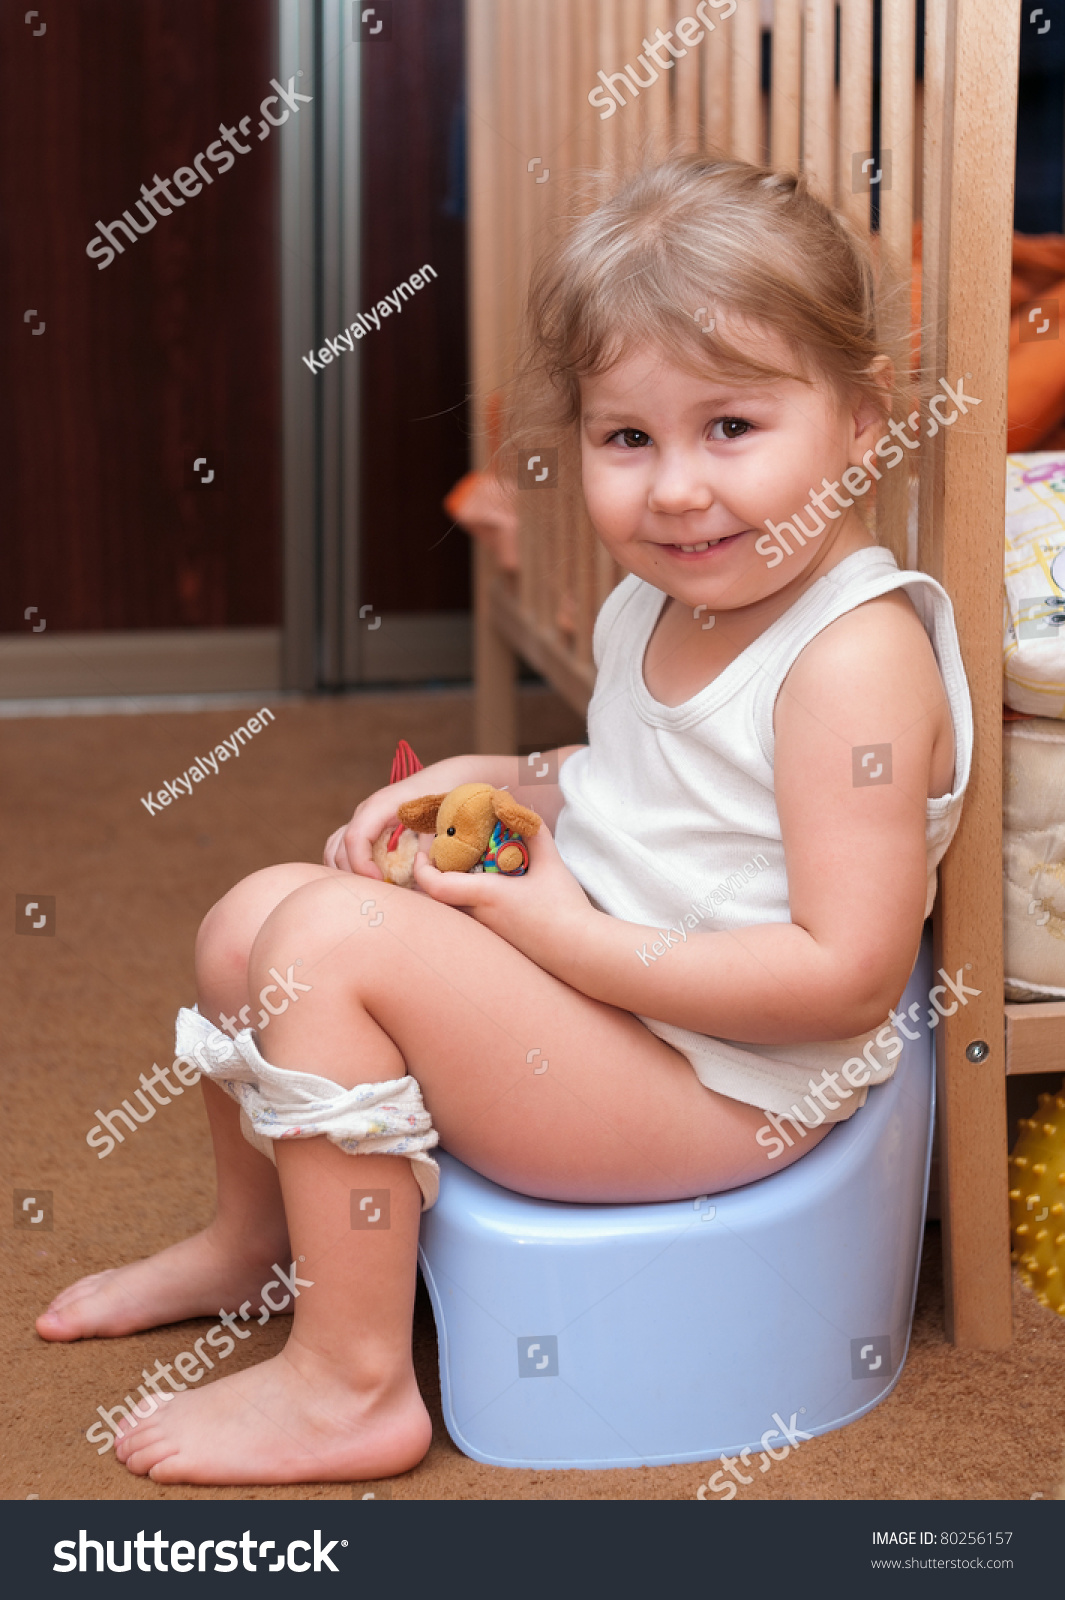 http://image.shutterstock.com/z/stock-photo-little-girl-sitting-on-a-chamber-pot-in-the-room-80256157.jpg